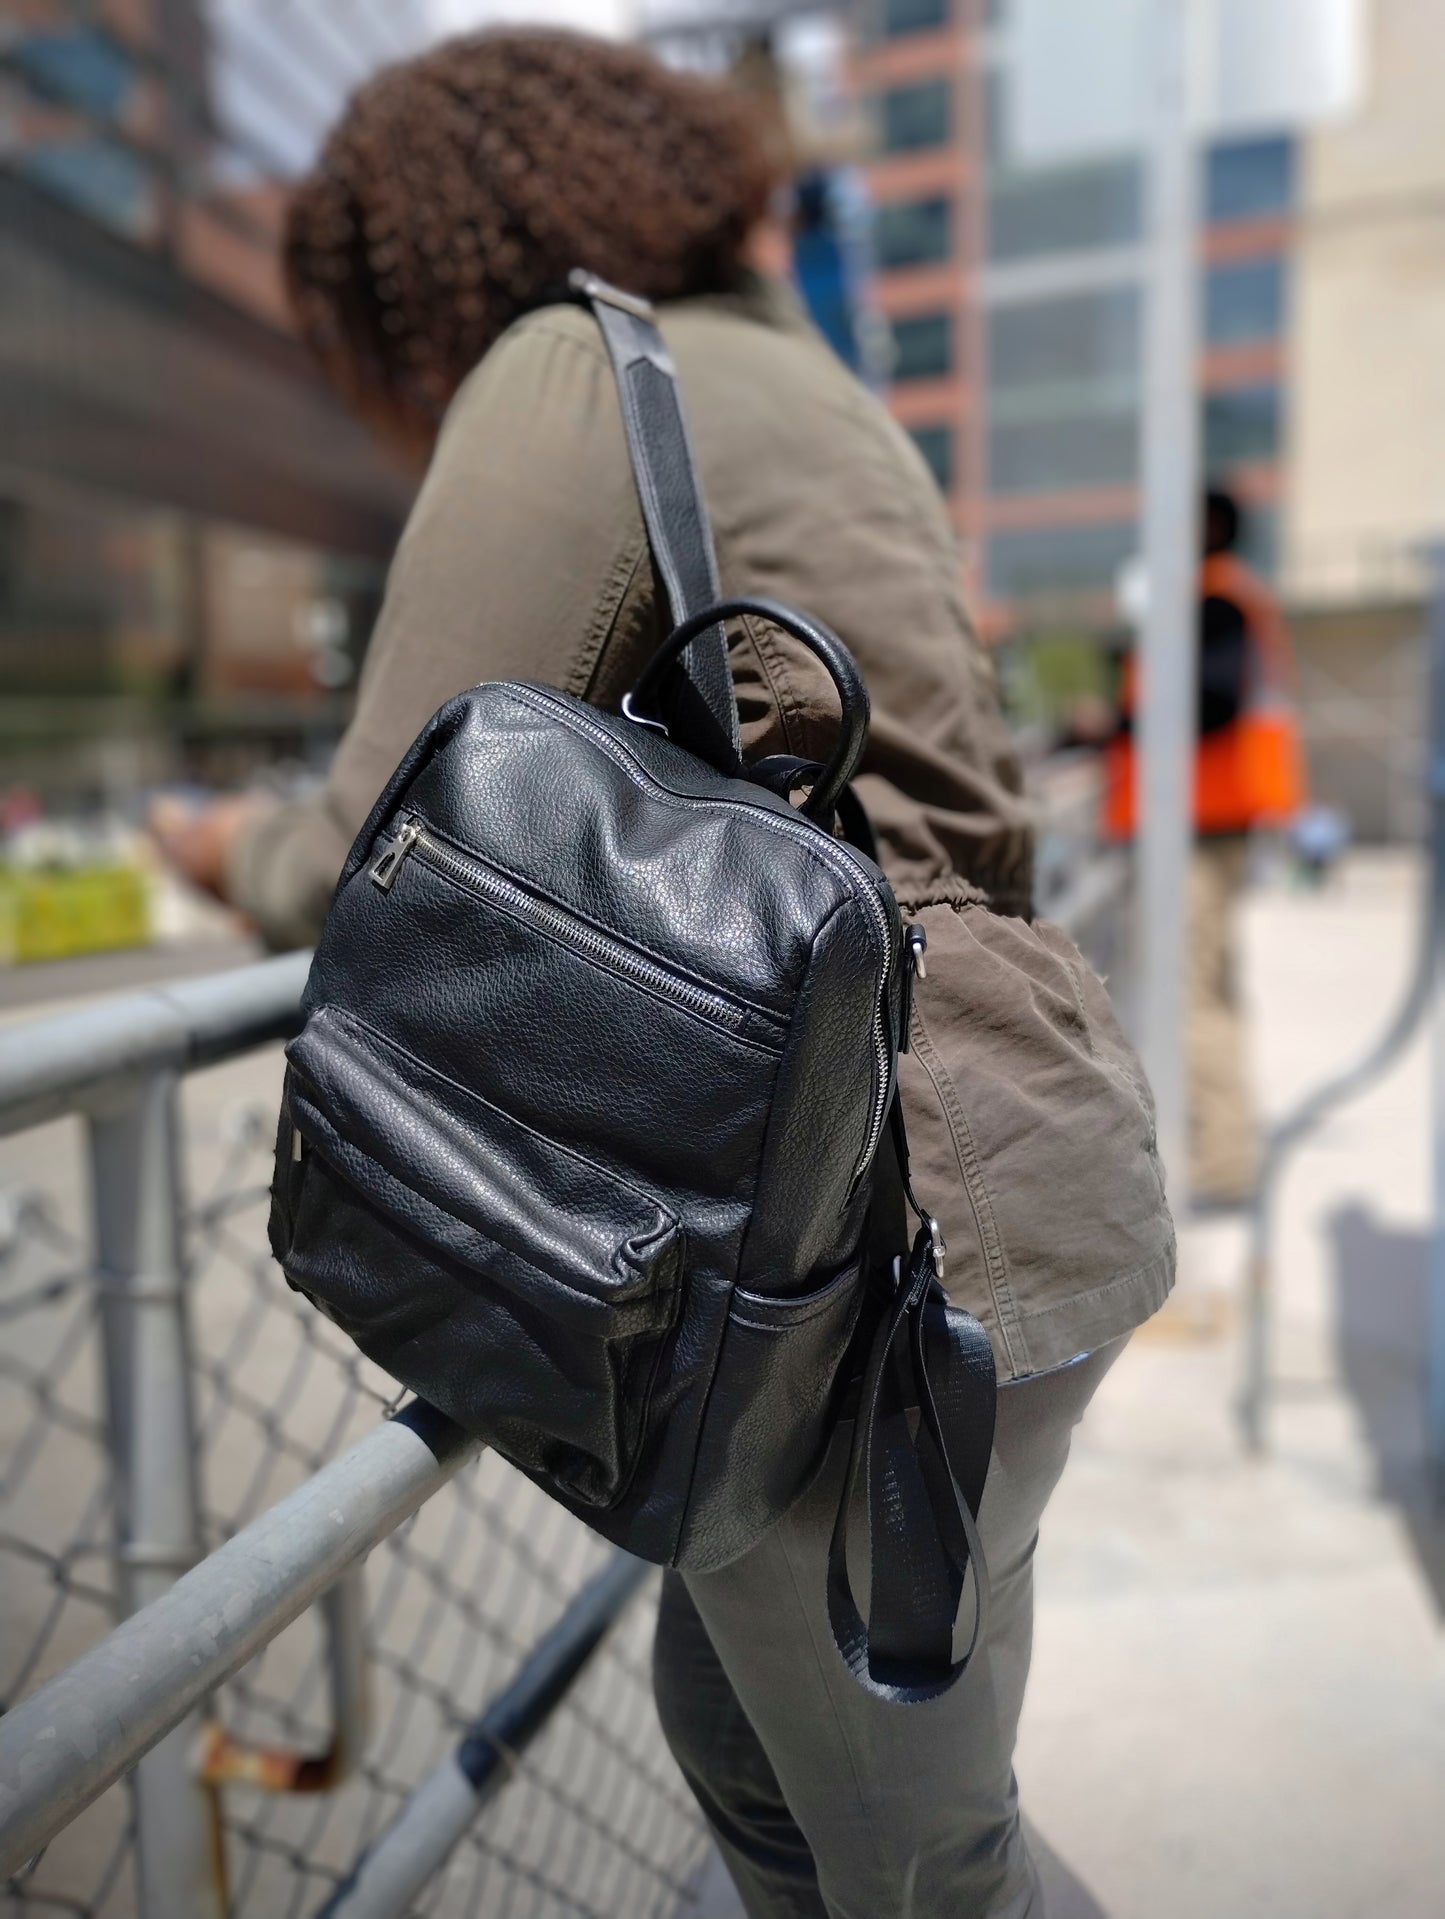 Gallo Vegan Leather Backpack Bag